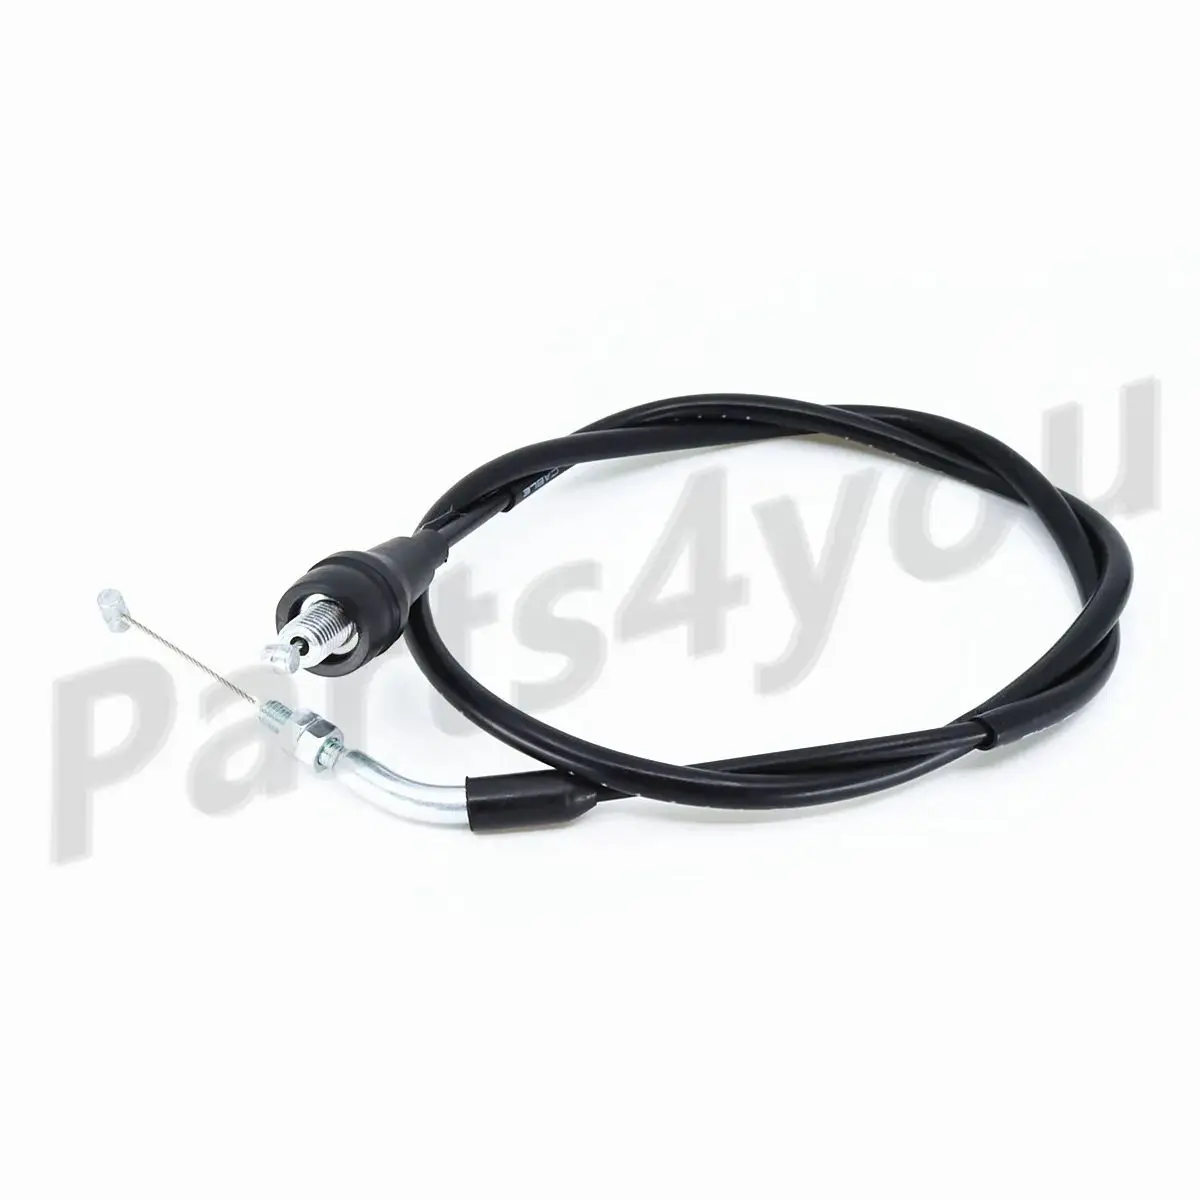 Handlebar Throttle Cable for CFmoto 400 450 191Q 500S 520 191R Gladaitor X450 X520 Goes Iron 450i Cobalt 550i ATV 9GQ0-105000